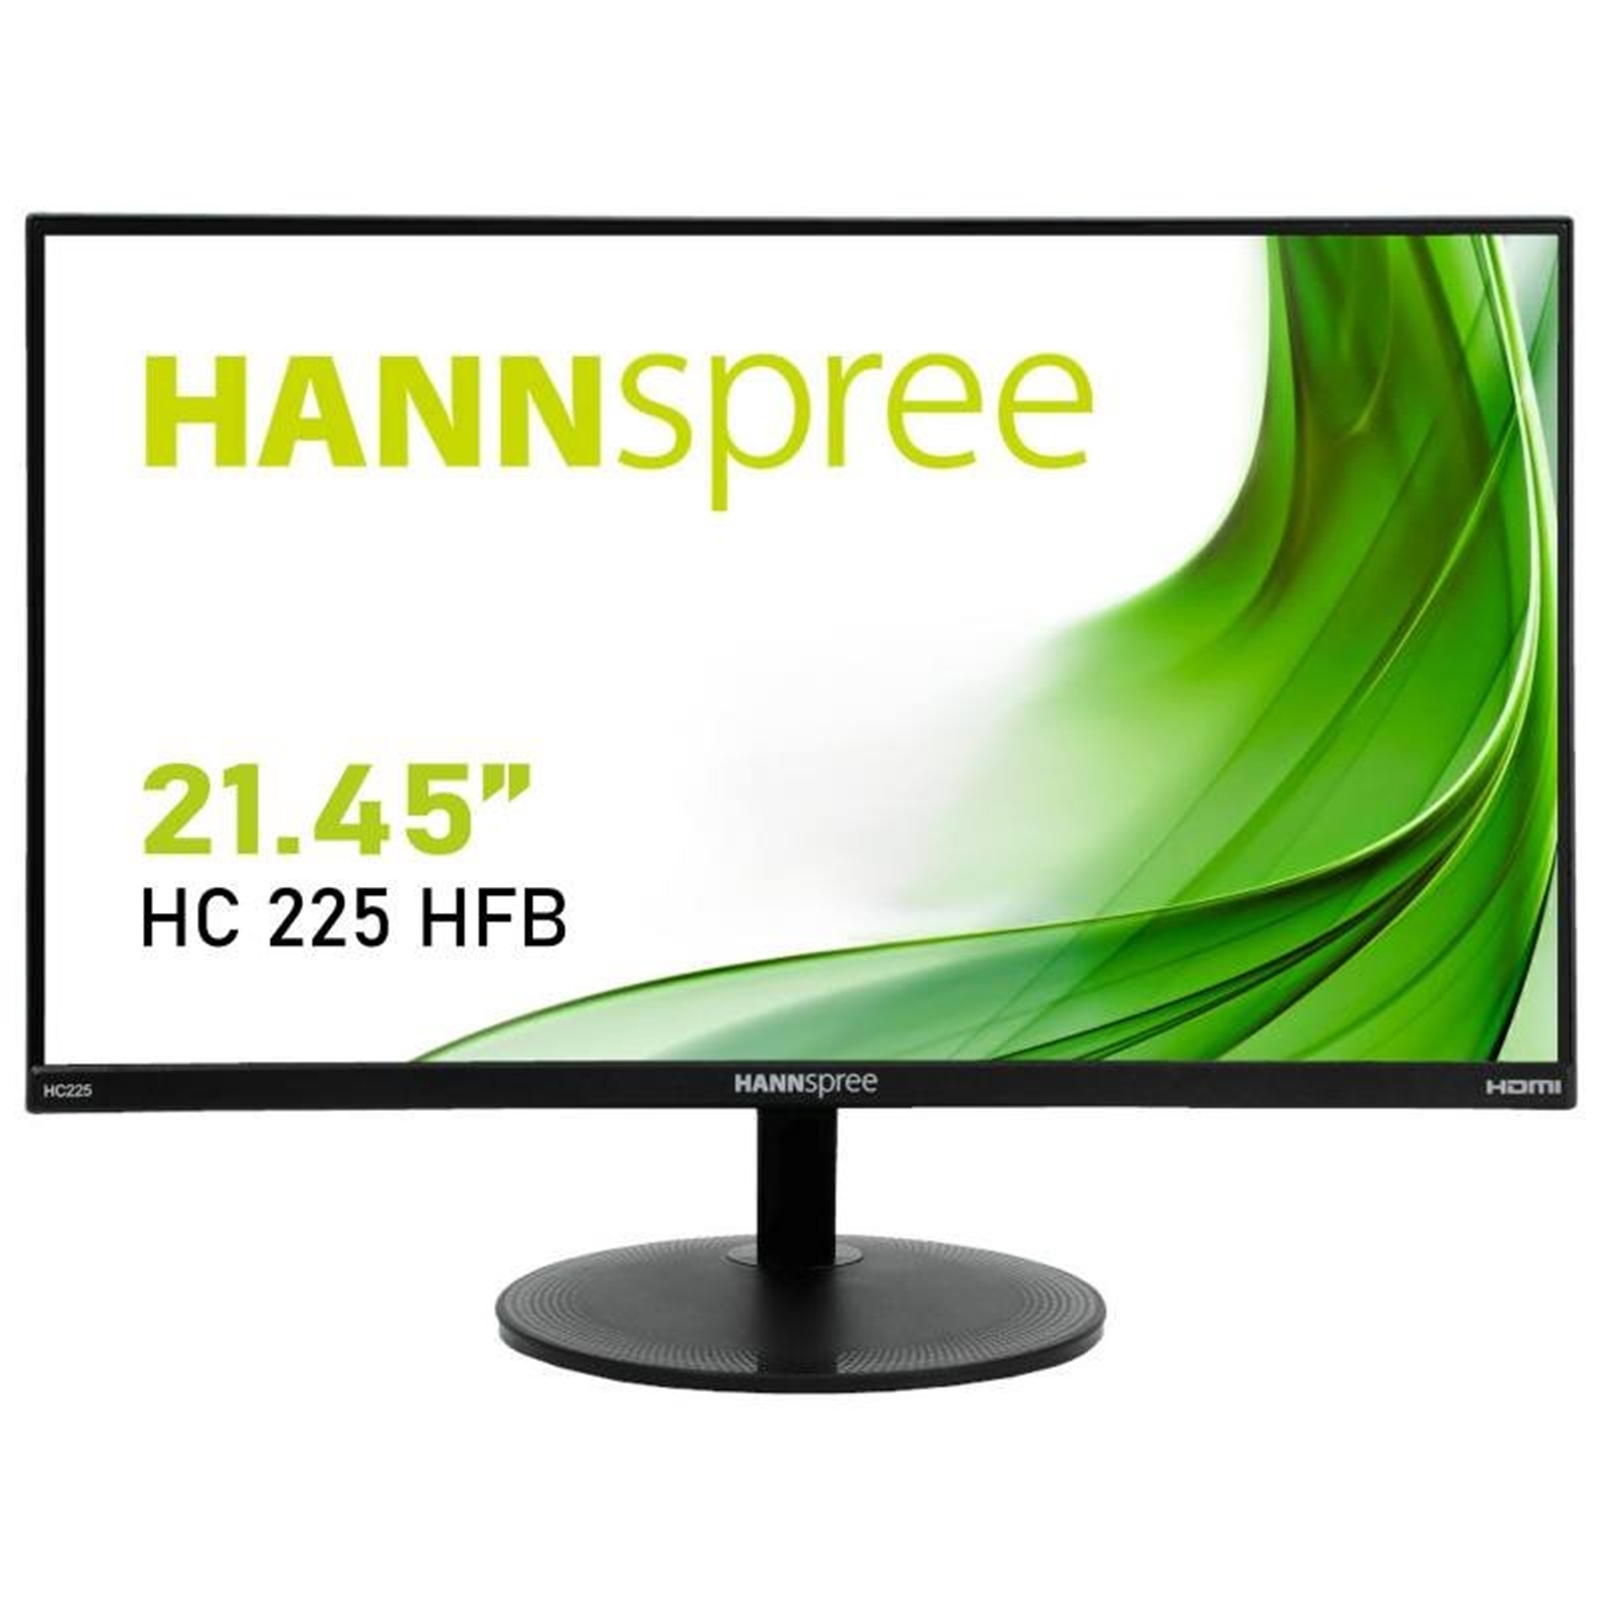 Hannspree HC225HFB 21.45" Full HD Monitor